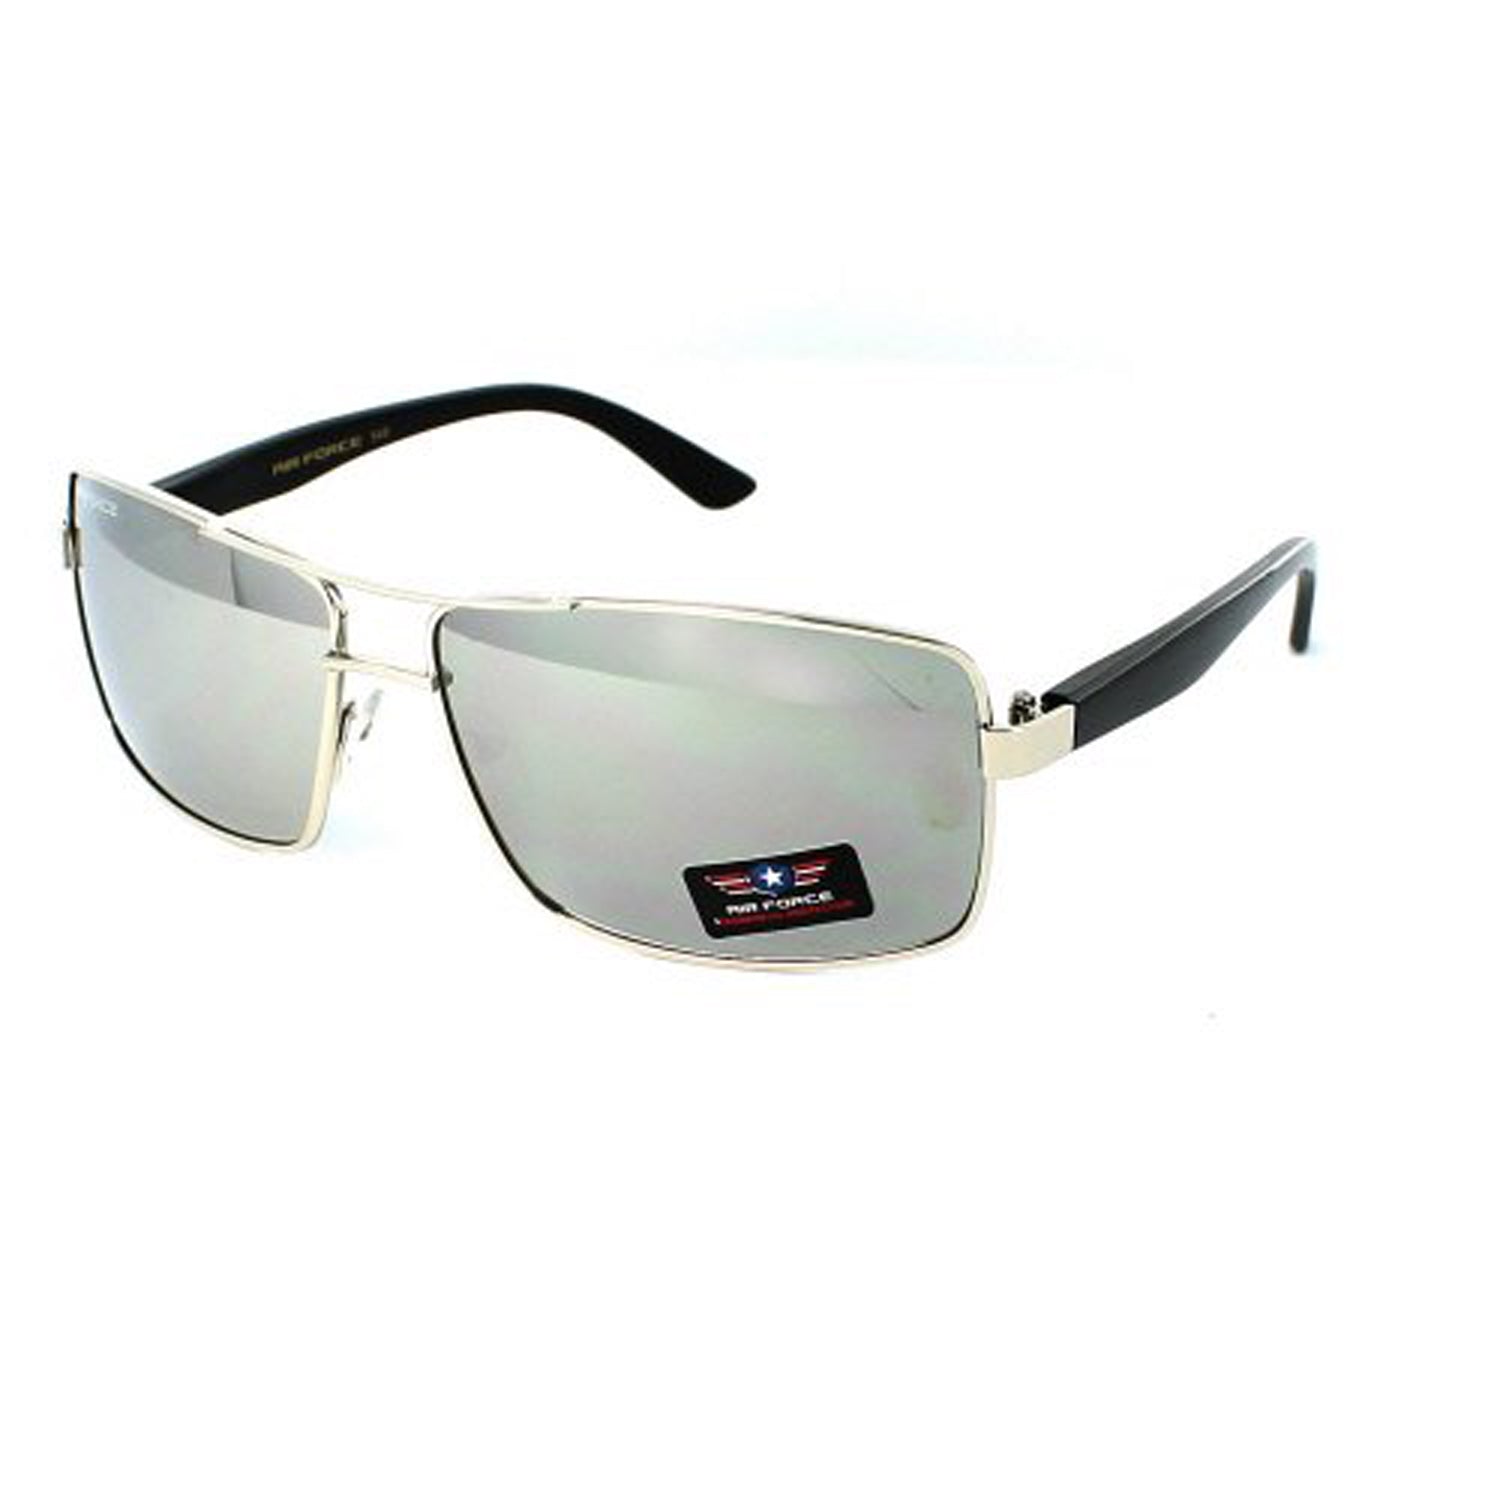 AIR FORCE Sunglasses Aviator 549 - Silver